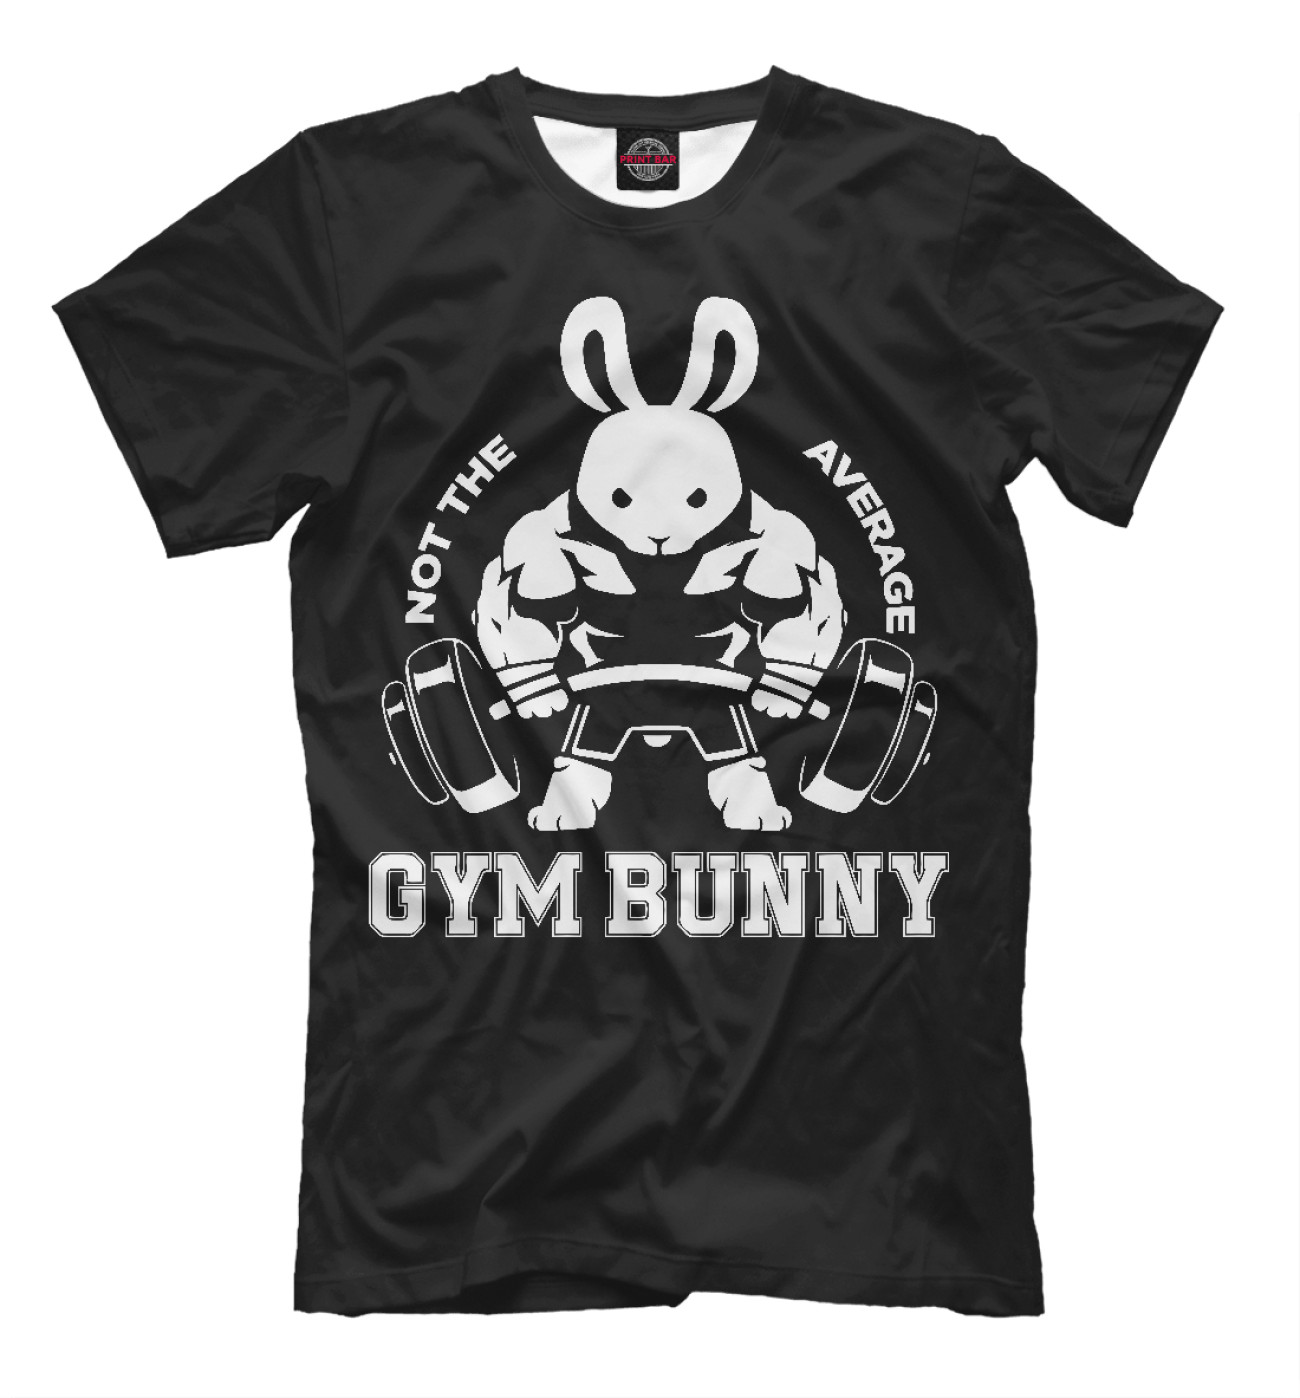 Мужская Футболка Gym Bunny, артикул: FIT-623753-fut-2